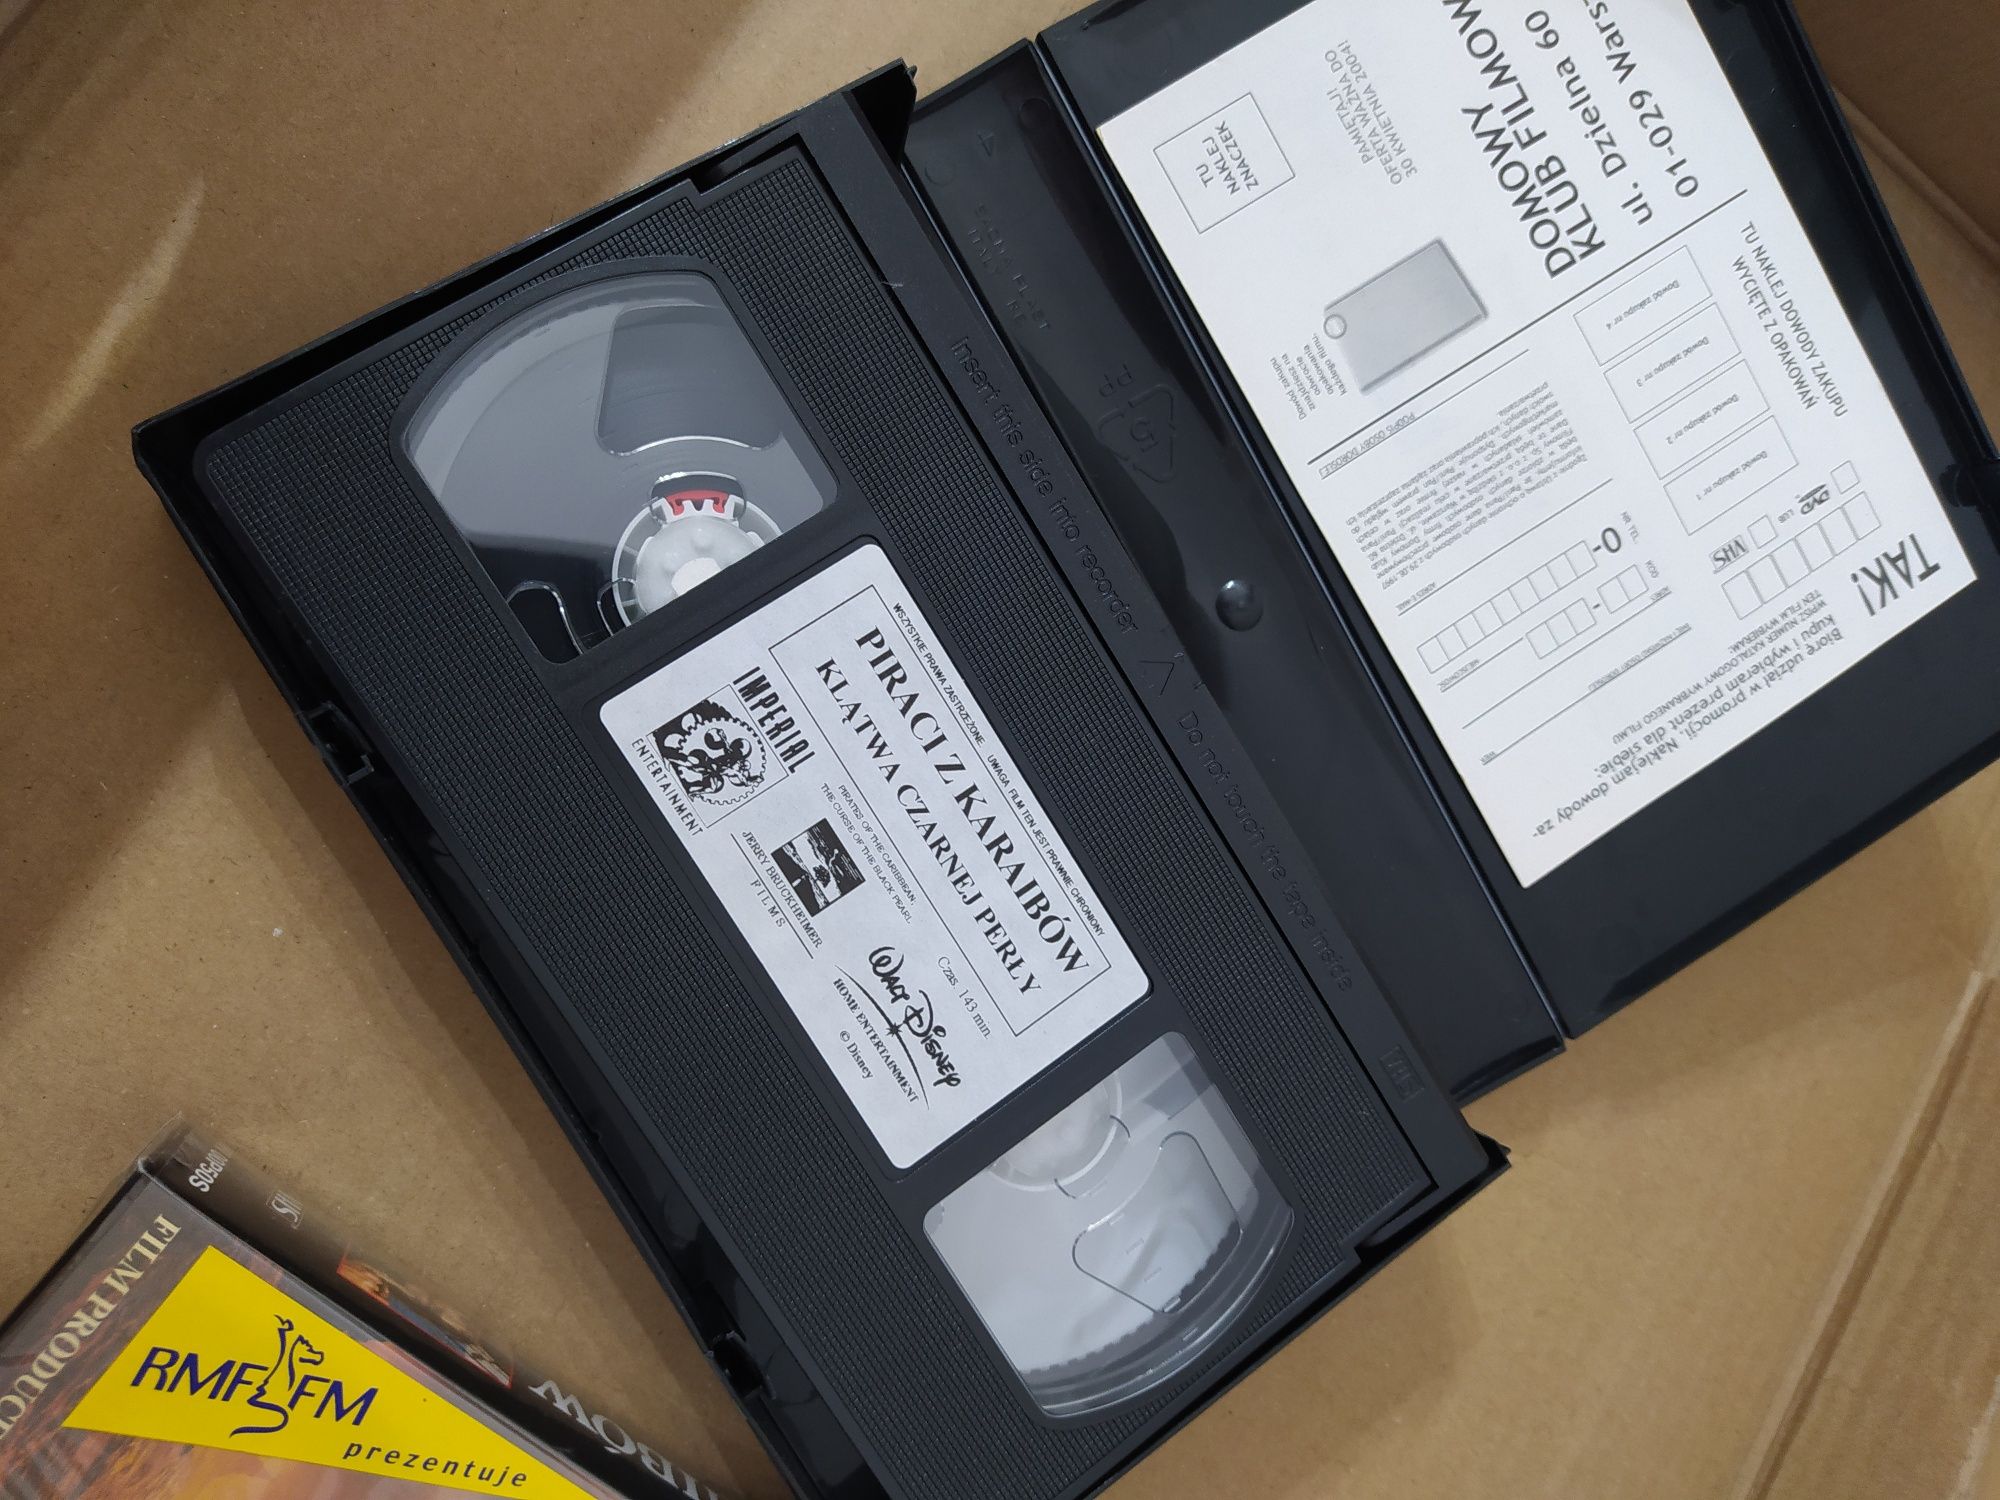 Kaseta VHS Piraci z Karaibów